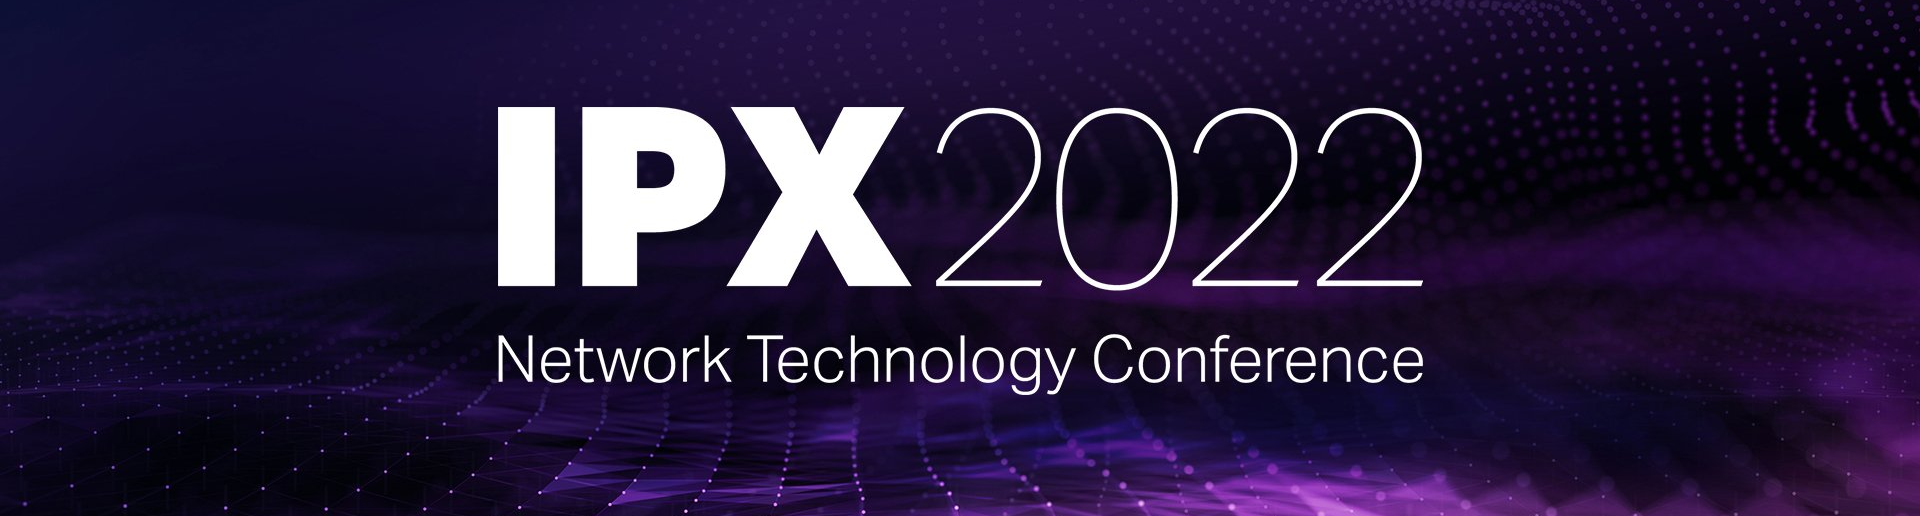 IPX 2022 Header